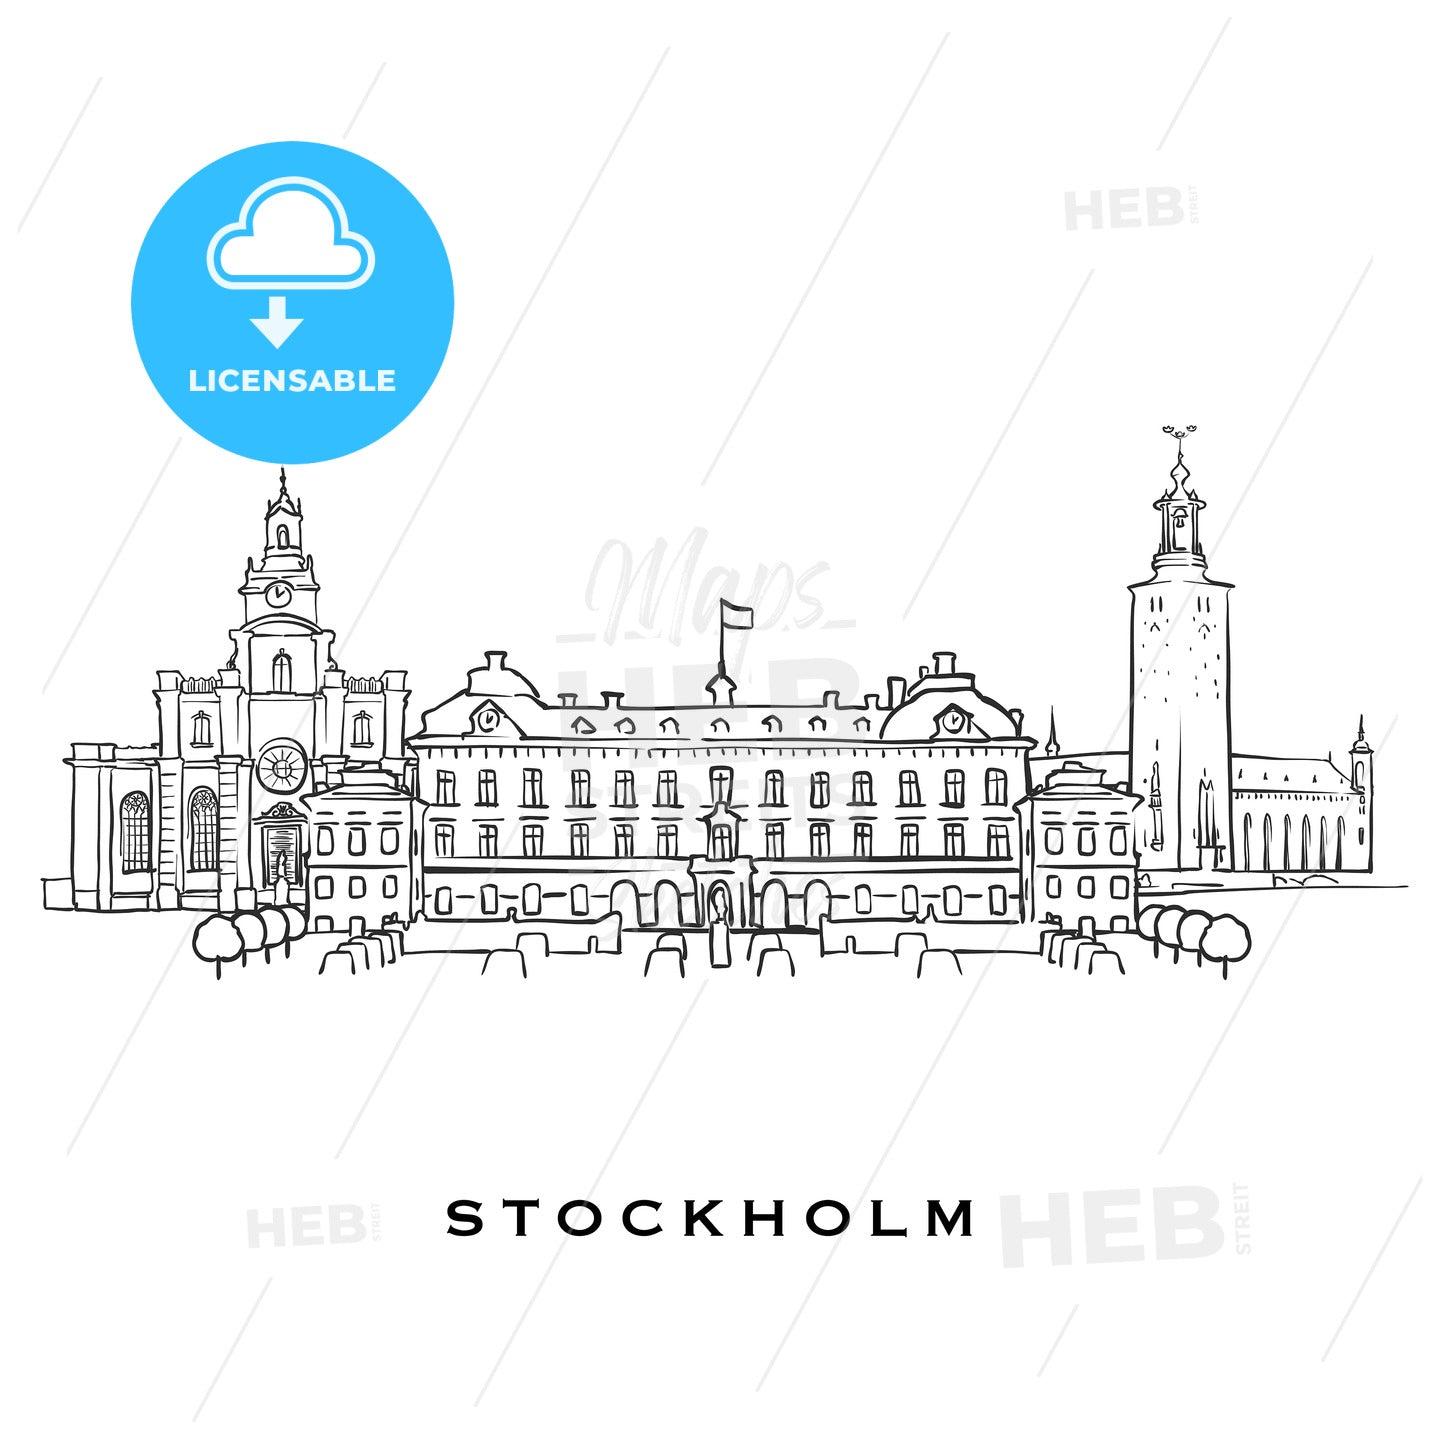 Stockholm Sweden famous architecture – instant download